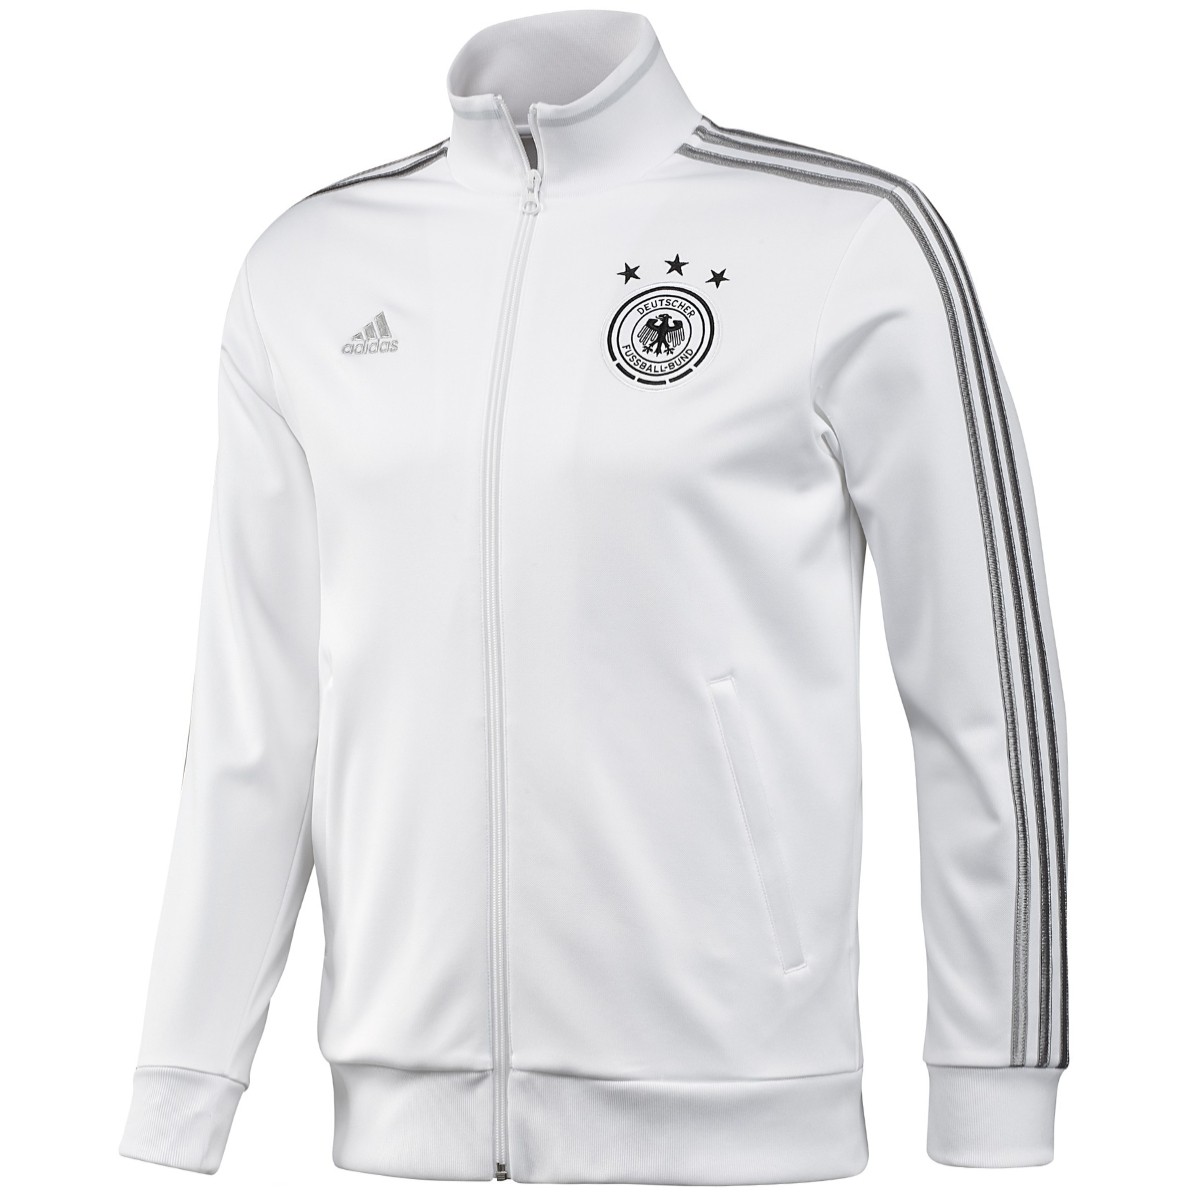 adidas 2015 jacket